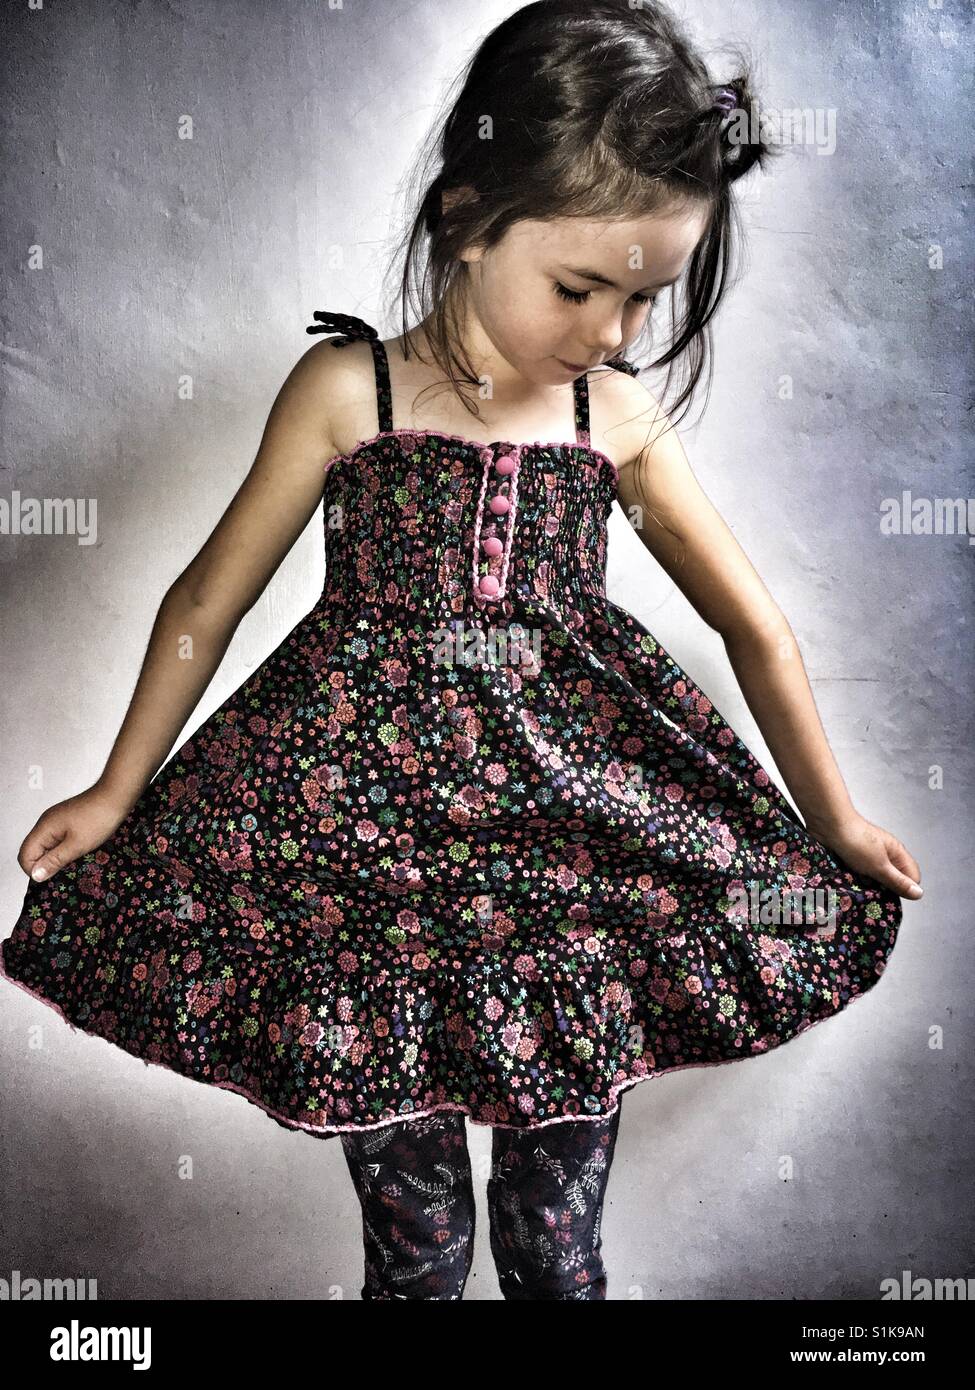 Summer dress and leggings Stock Photo - Alamy